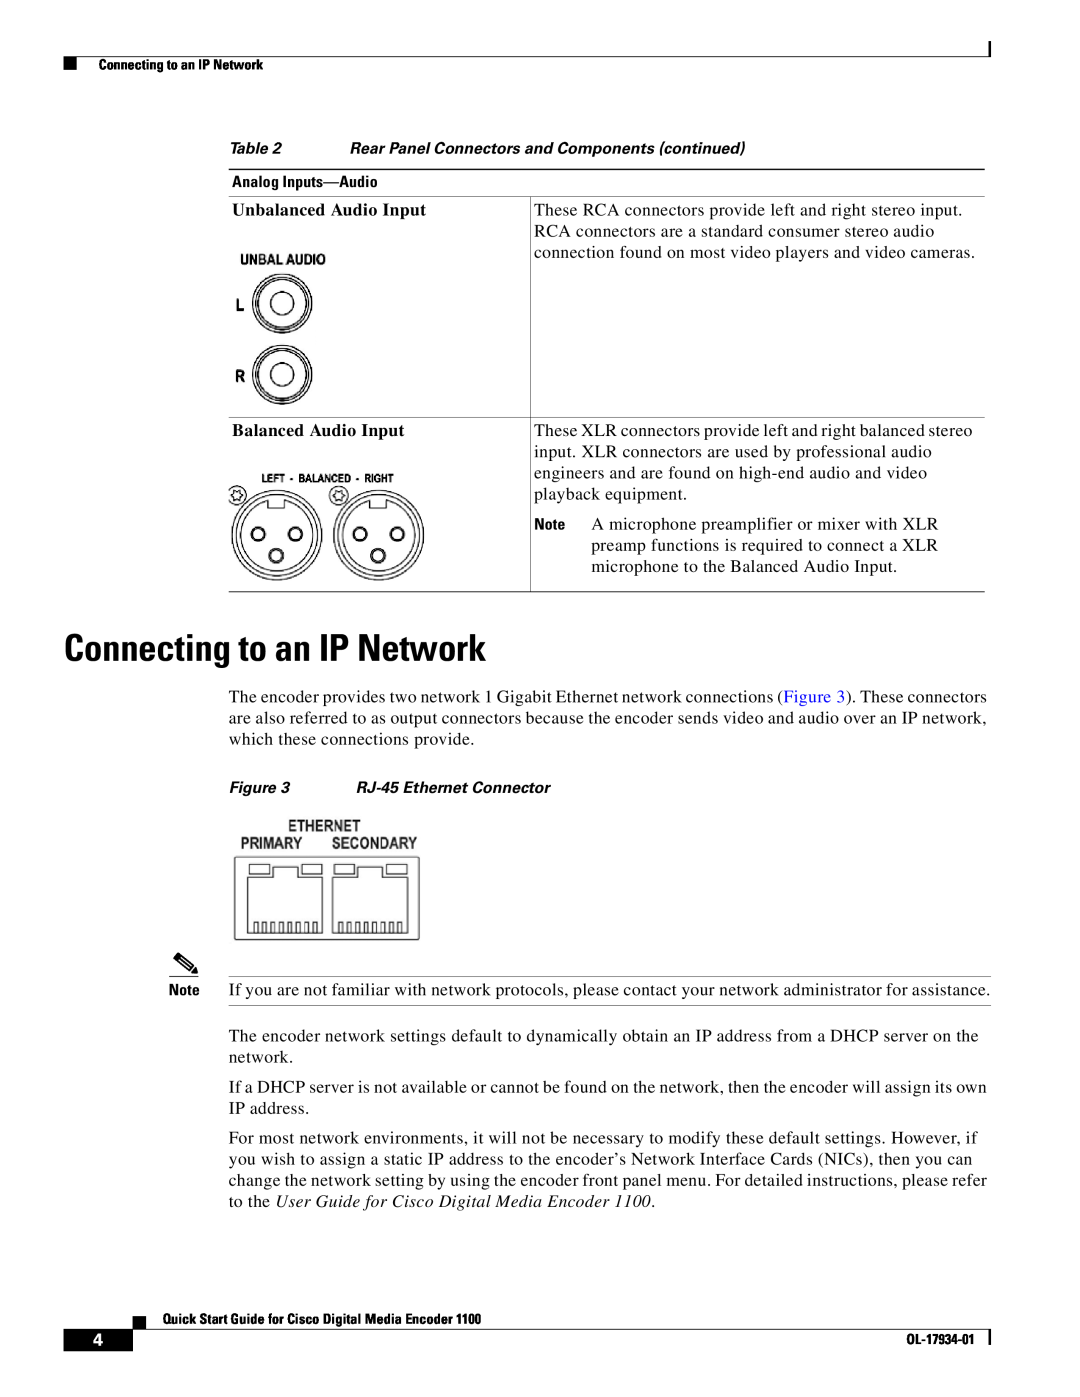 Cisco Systems 1100 quick start Connecting to an IP Network, Balanced Audio Input, Unbalanced Audio Input 